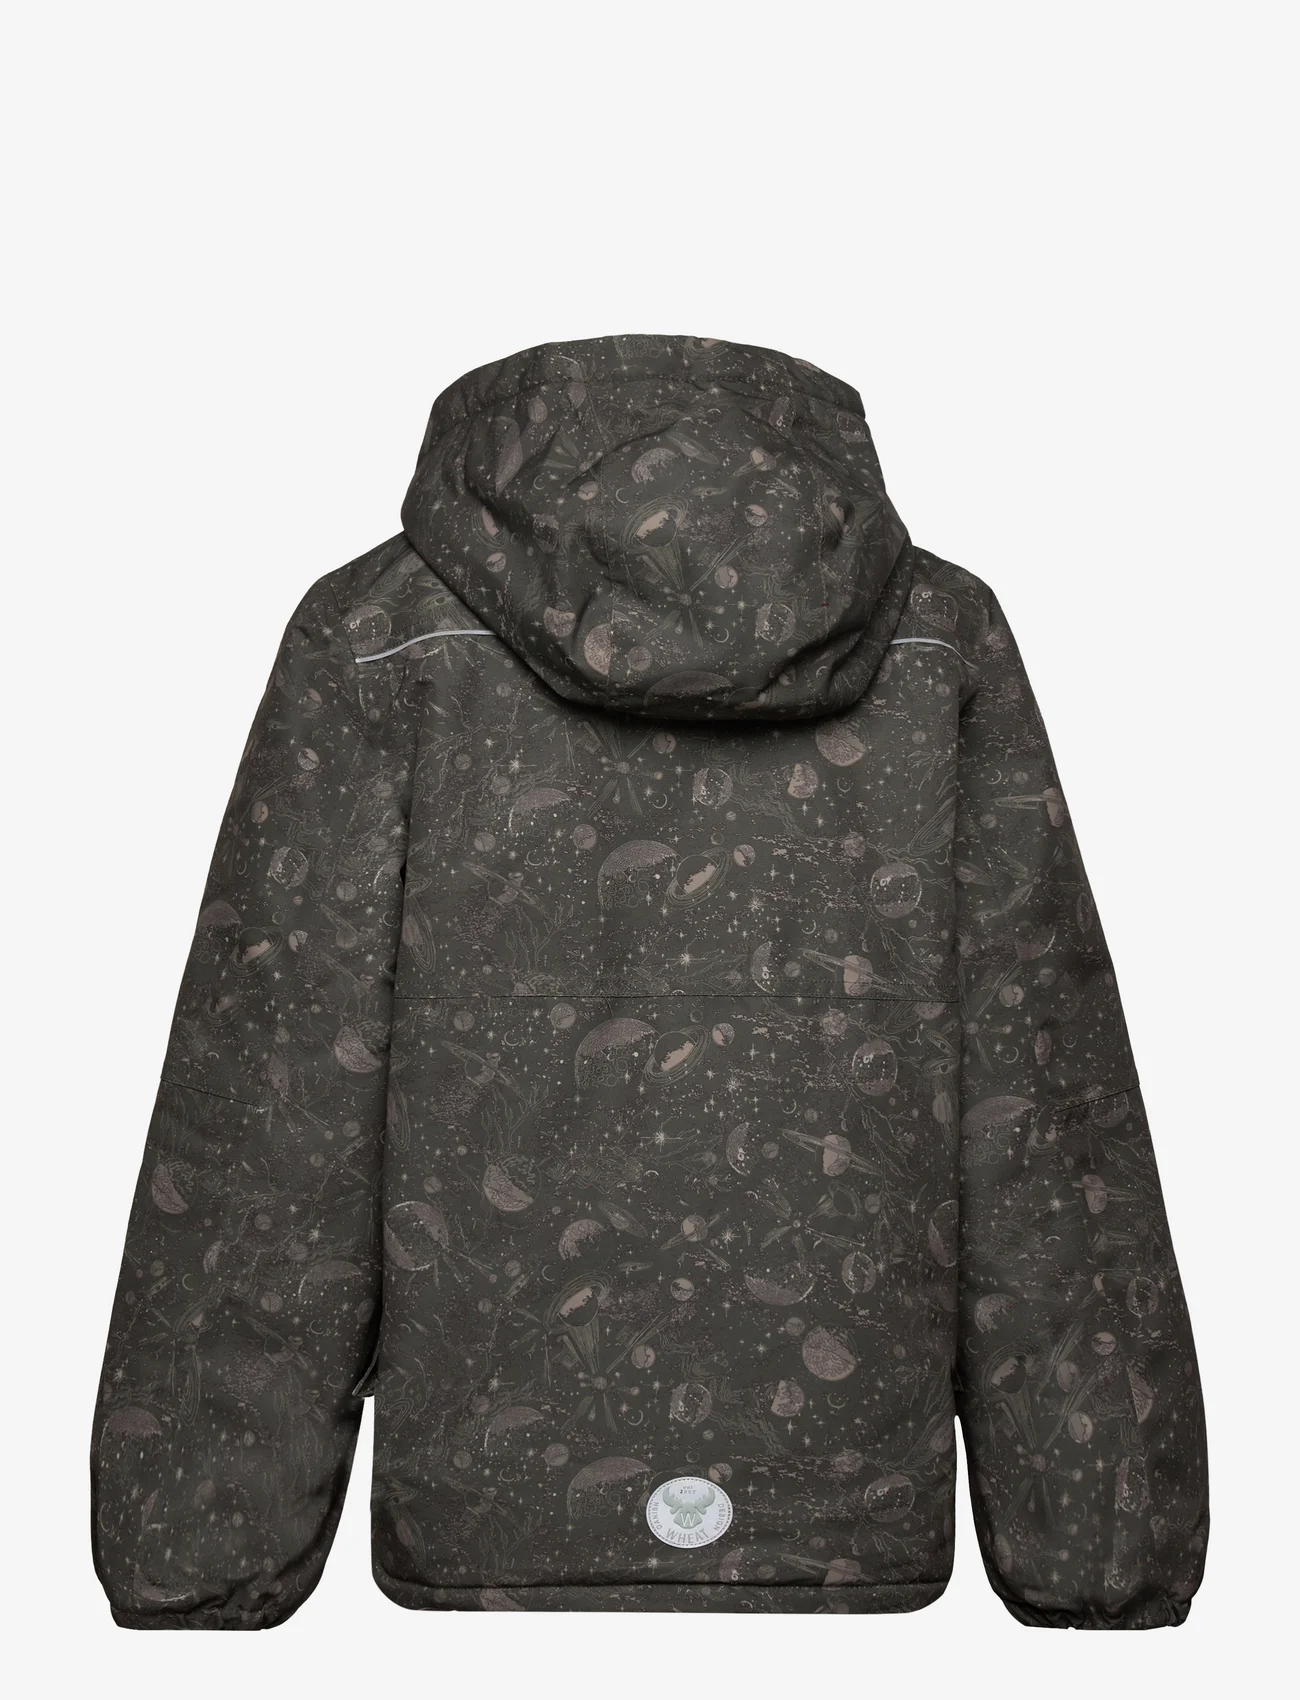 Wheat - Jacket Johan Tech - winter jackets - dry black space - 1